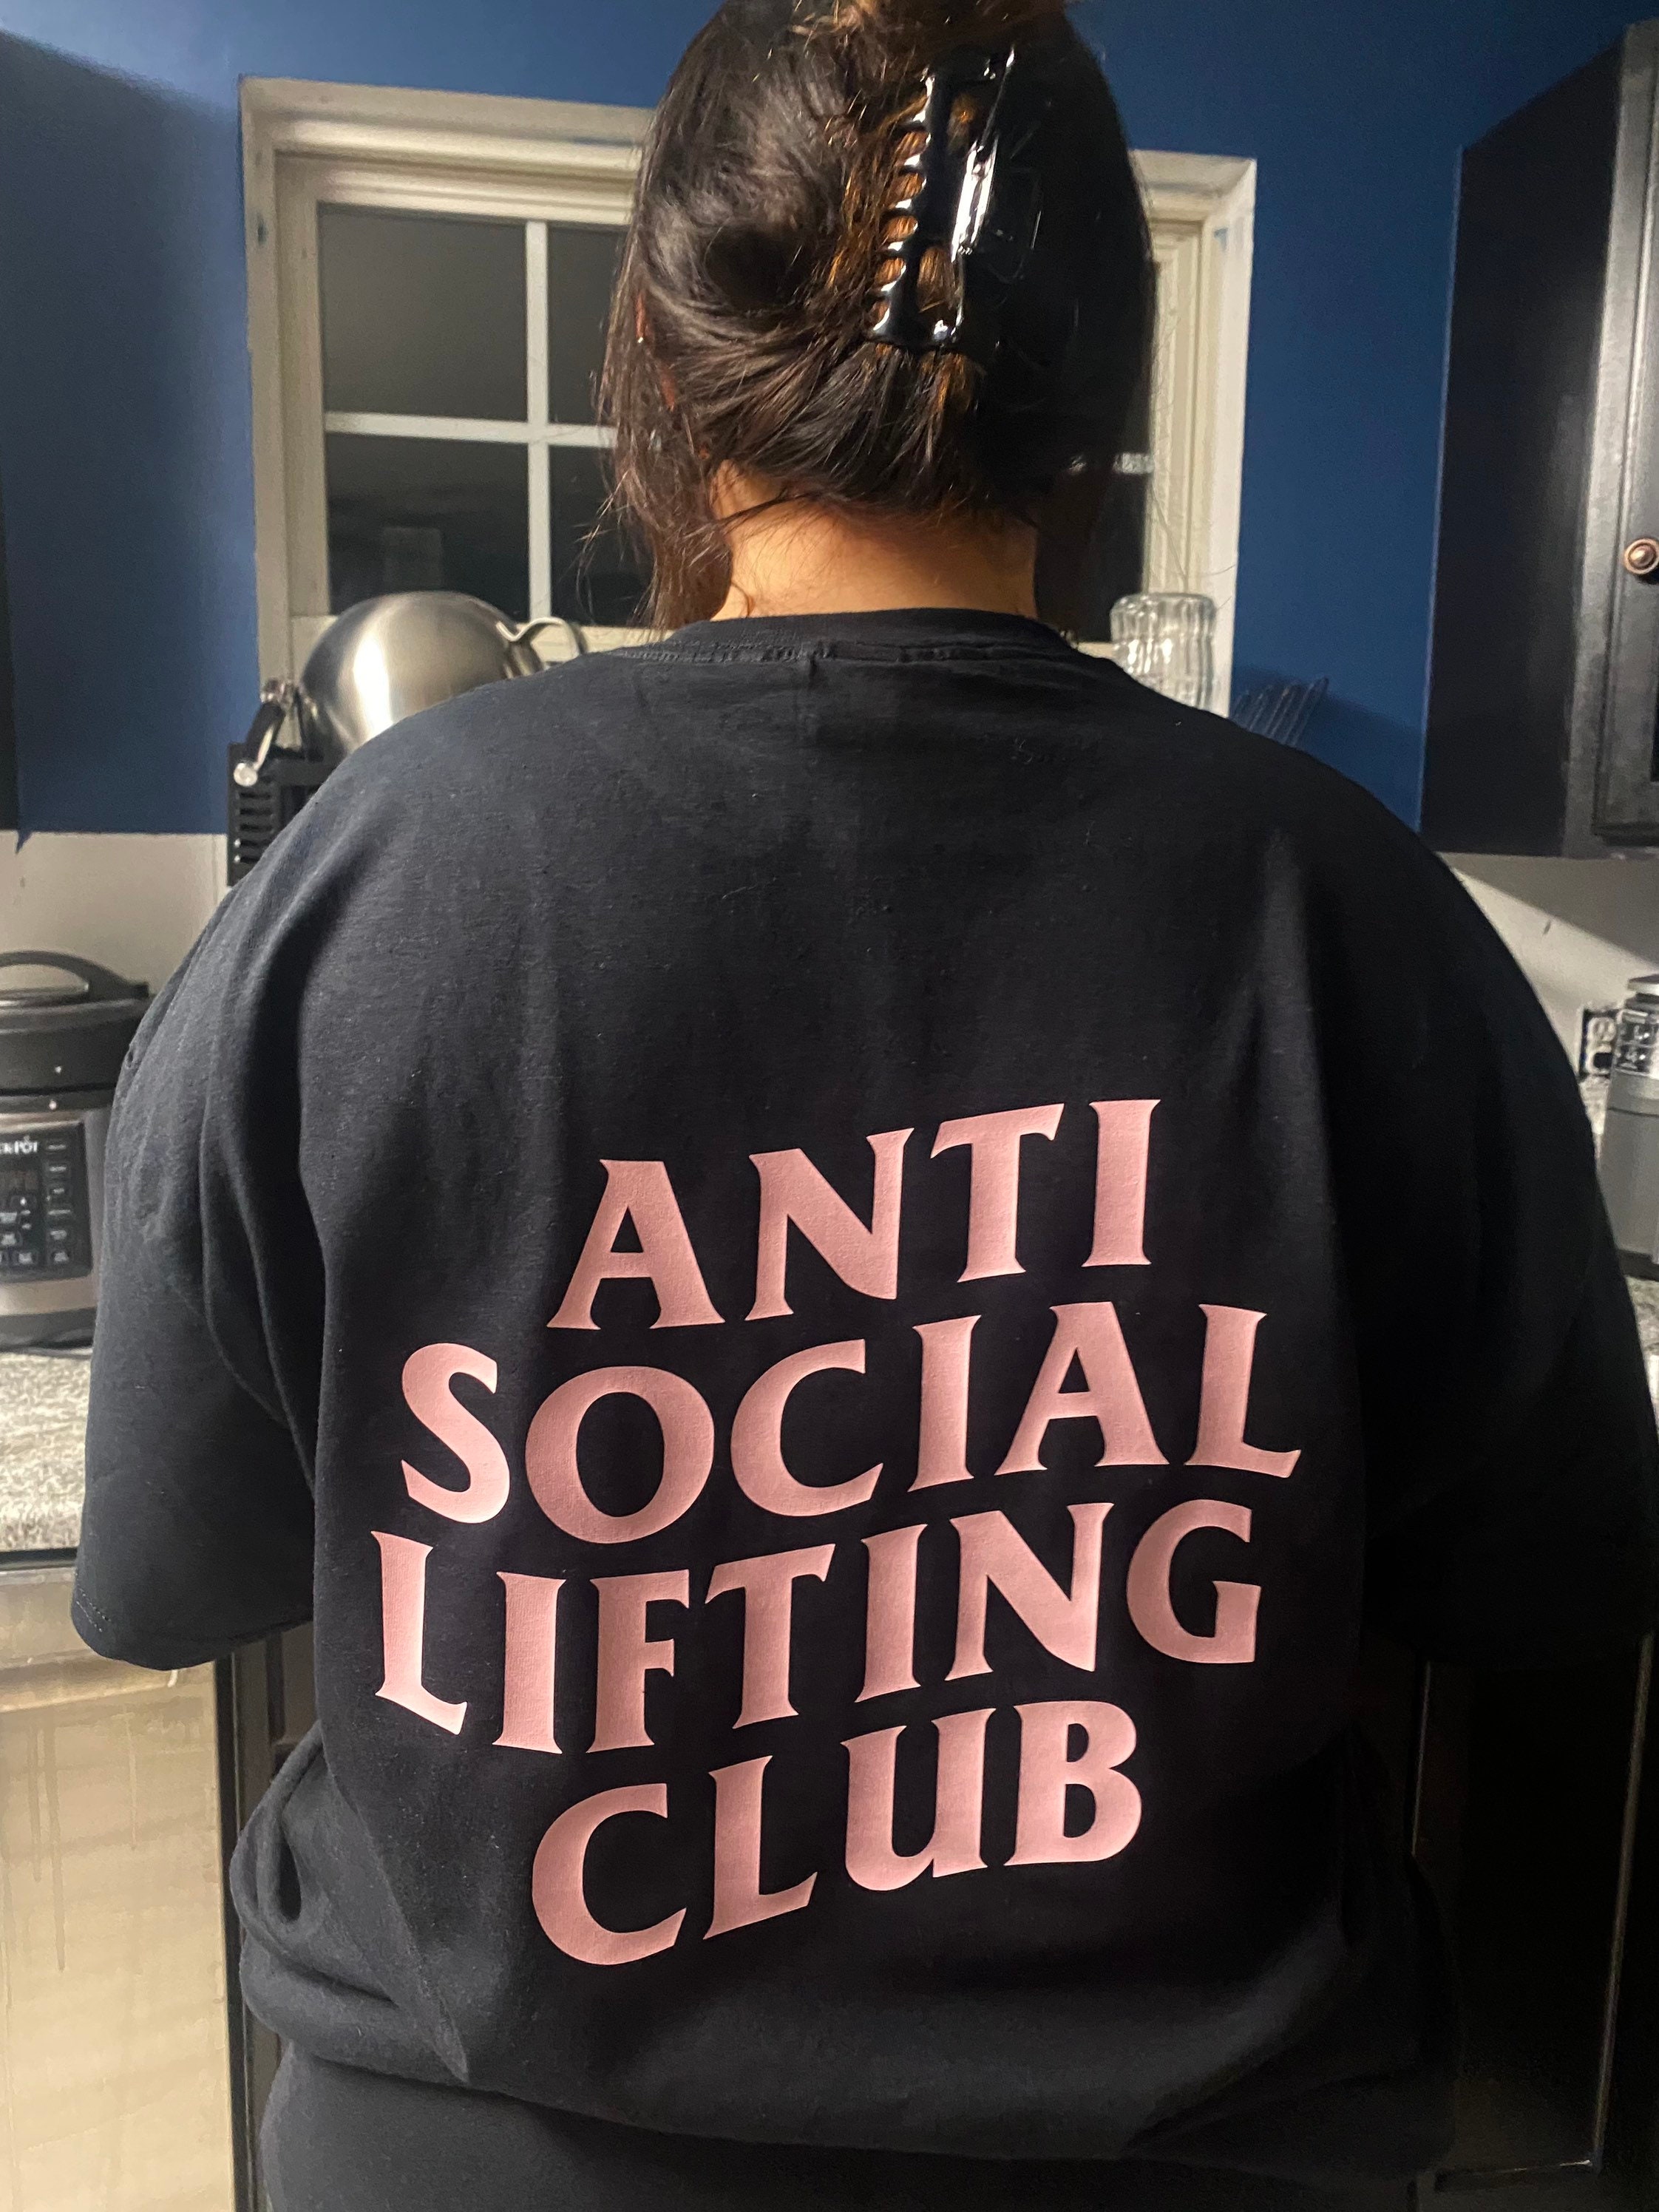 Pchee Anti-Social Gym Rat Club Crop Tee